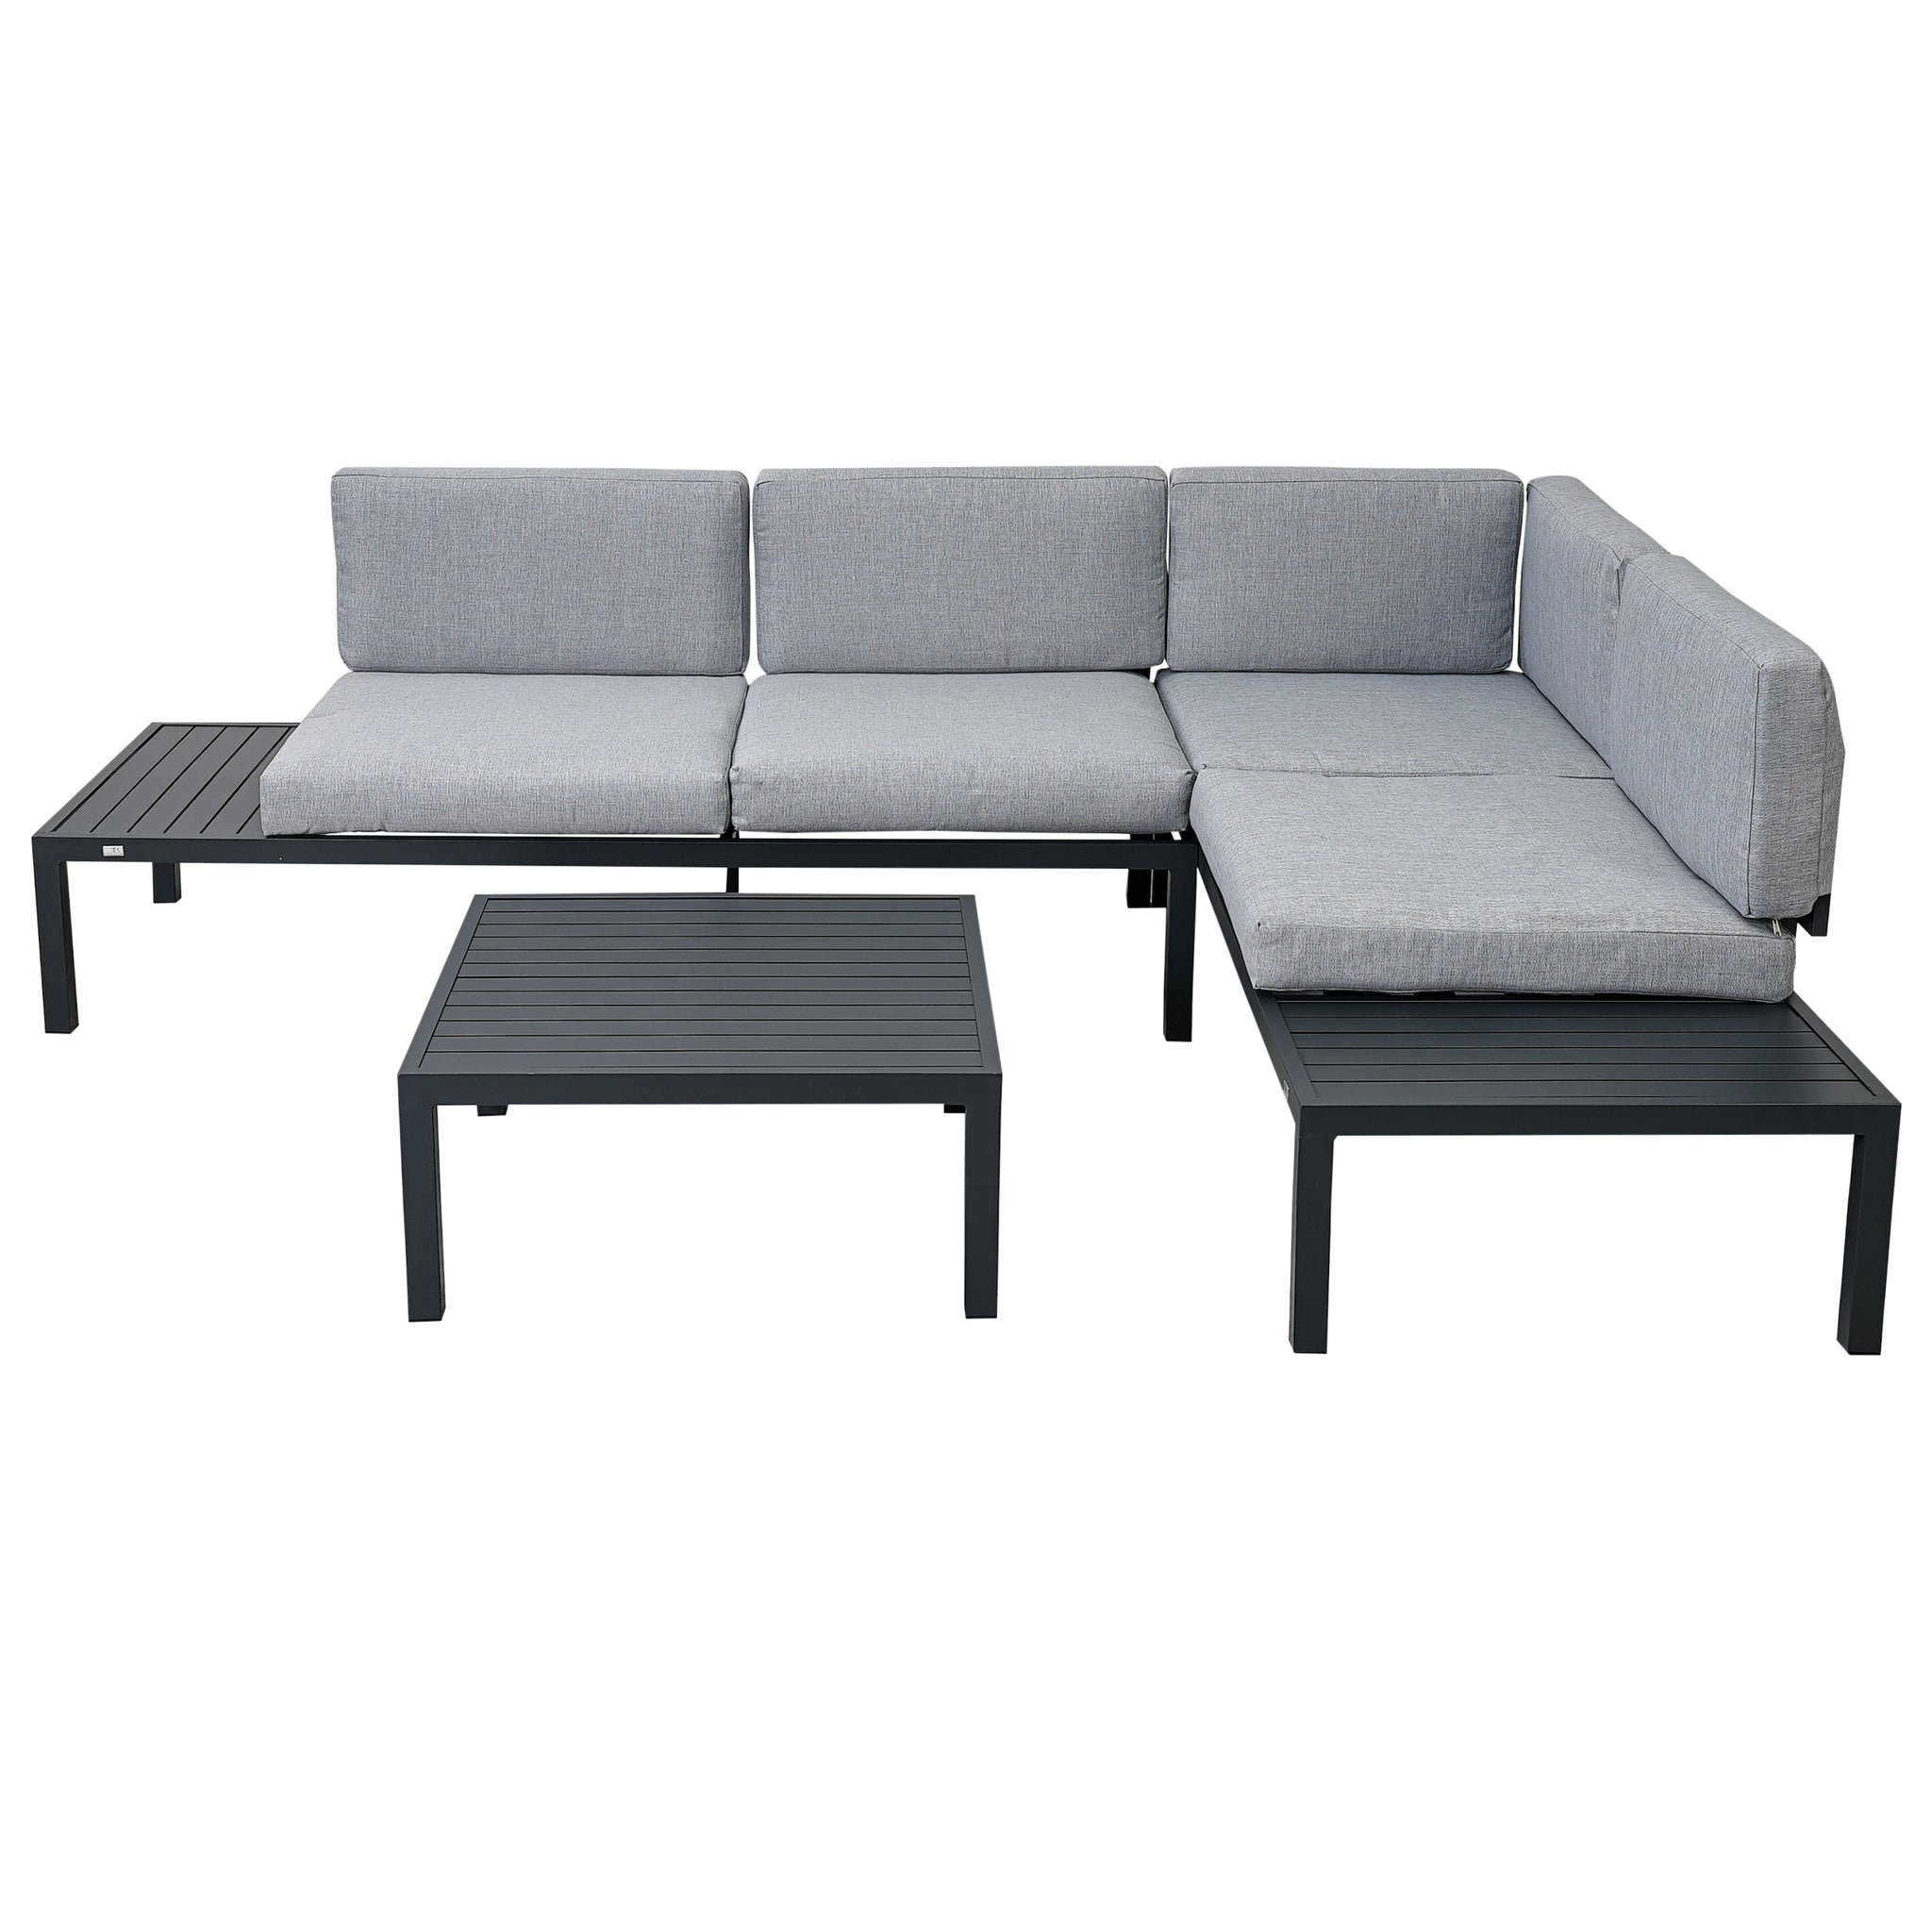 Outdoor 3 piece Aluminum Alloy Sectional Sofa